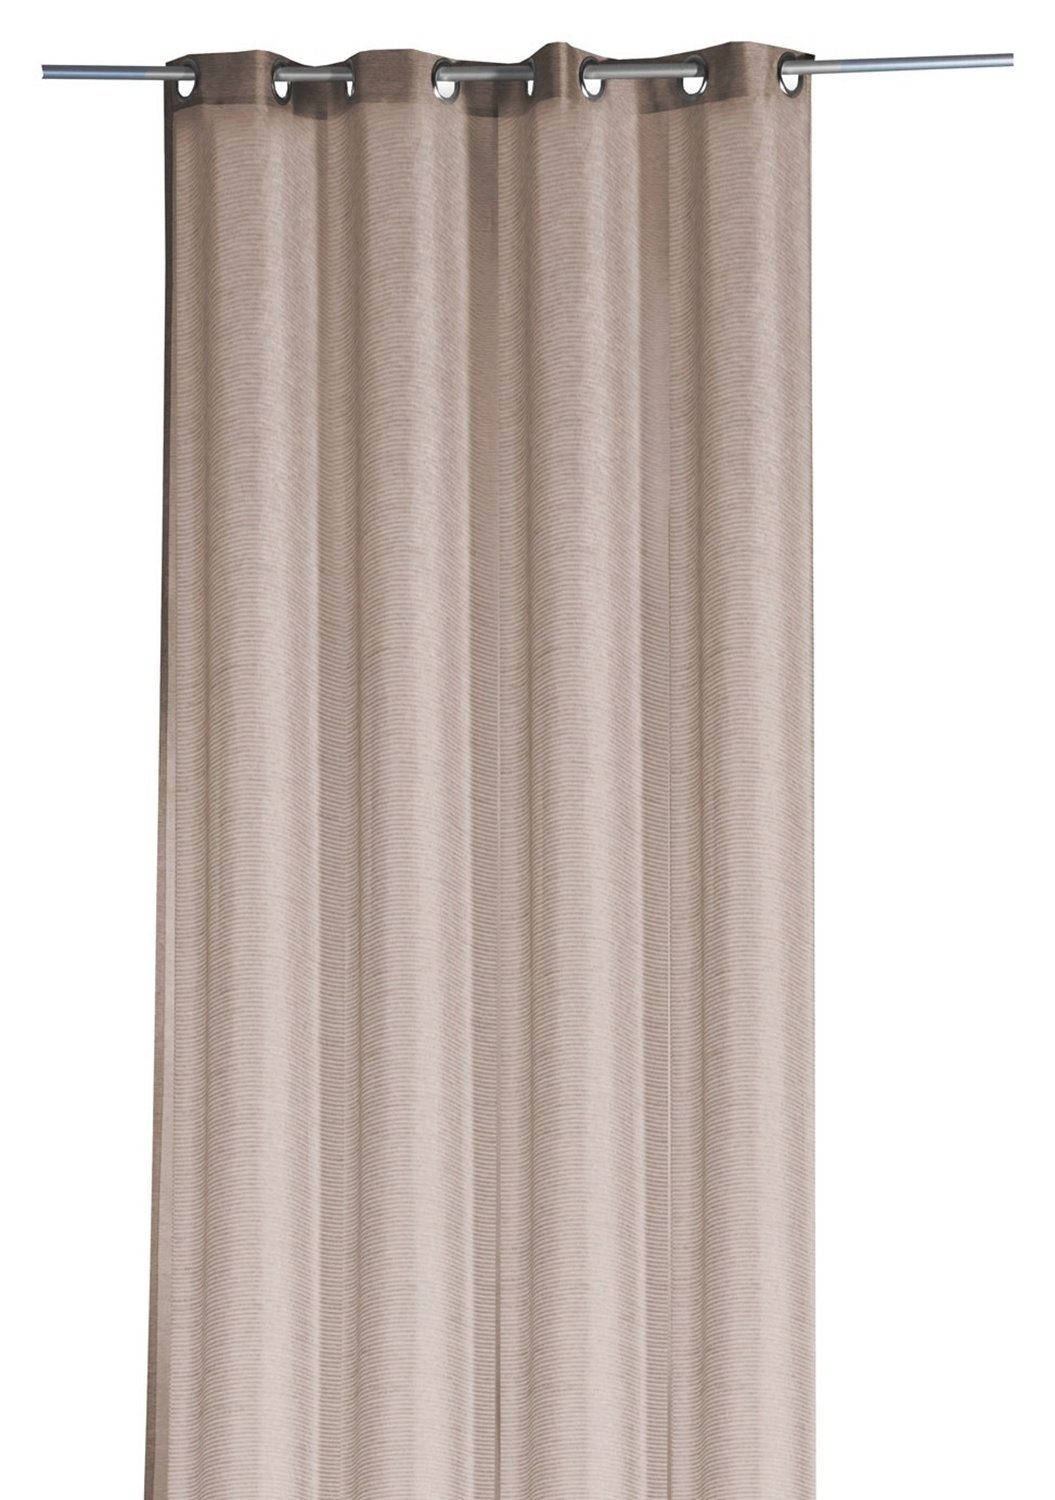 Vorhang SANDY, Ösenschal, Braun, L 135 cm, B 245 x cm Ösen, halbtransparent